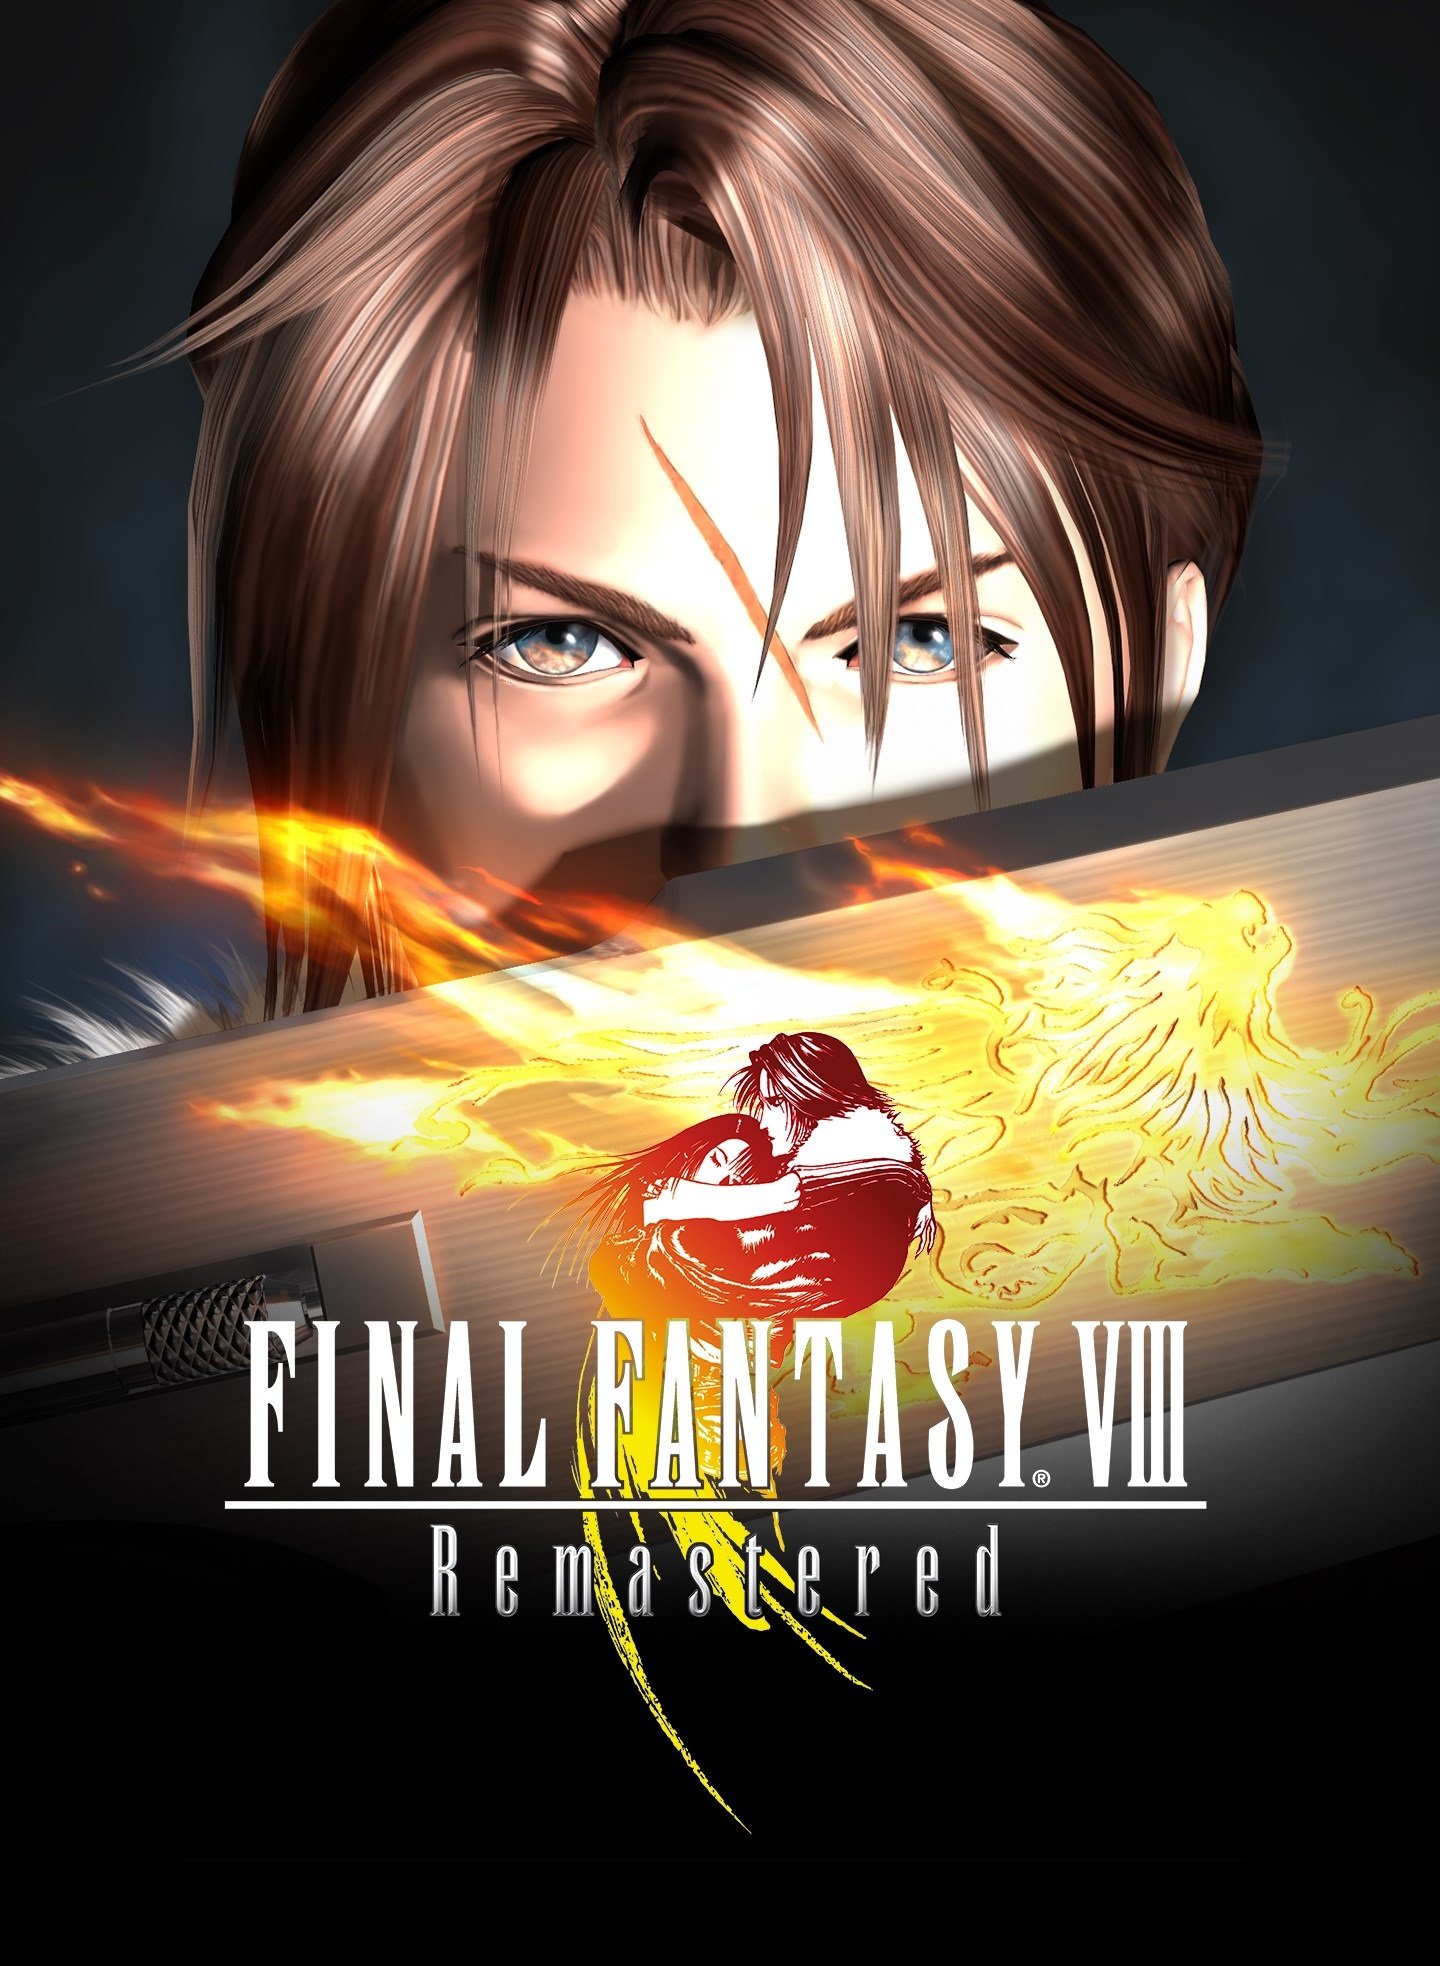 jaquette du jeu vidéo Final Fantasy VIII Remastered